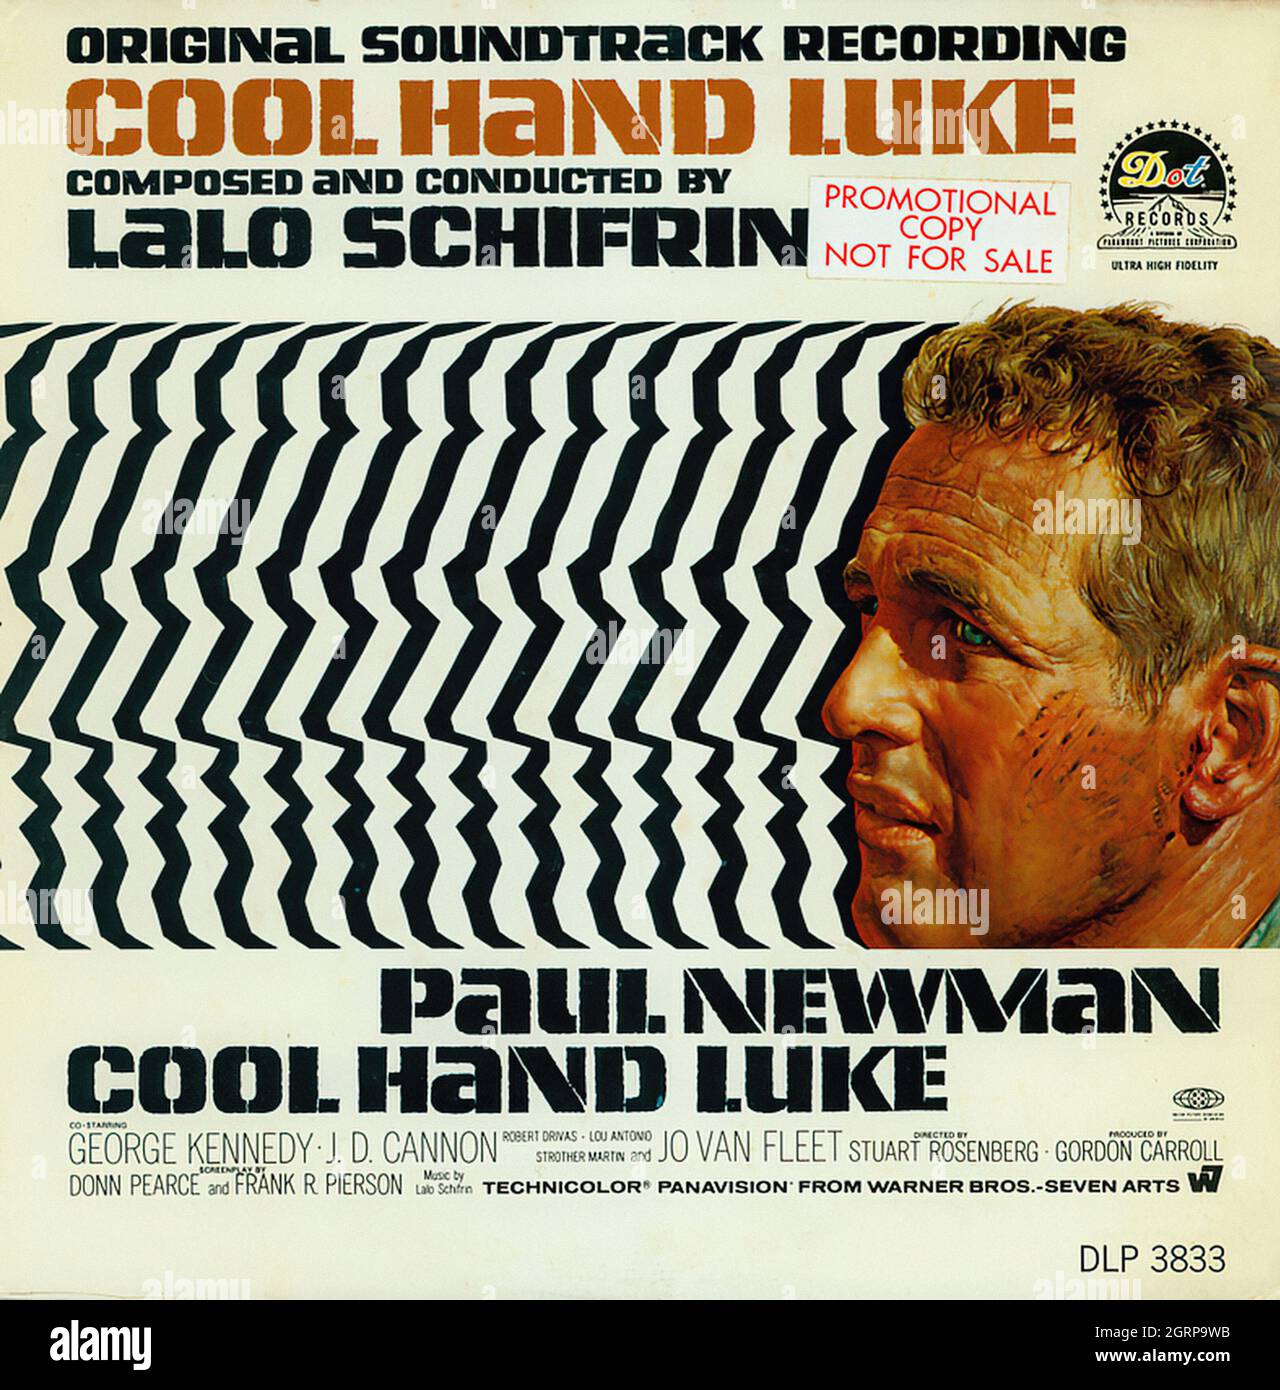 Cool Hand Luke - Vintage Soundtrack Vinyl Album Stock Photo